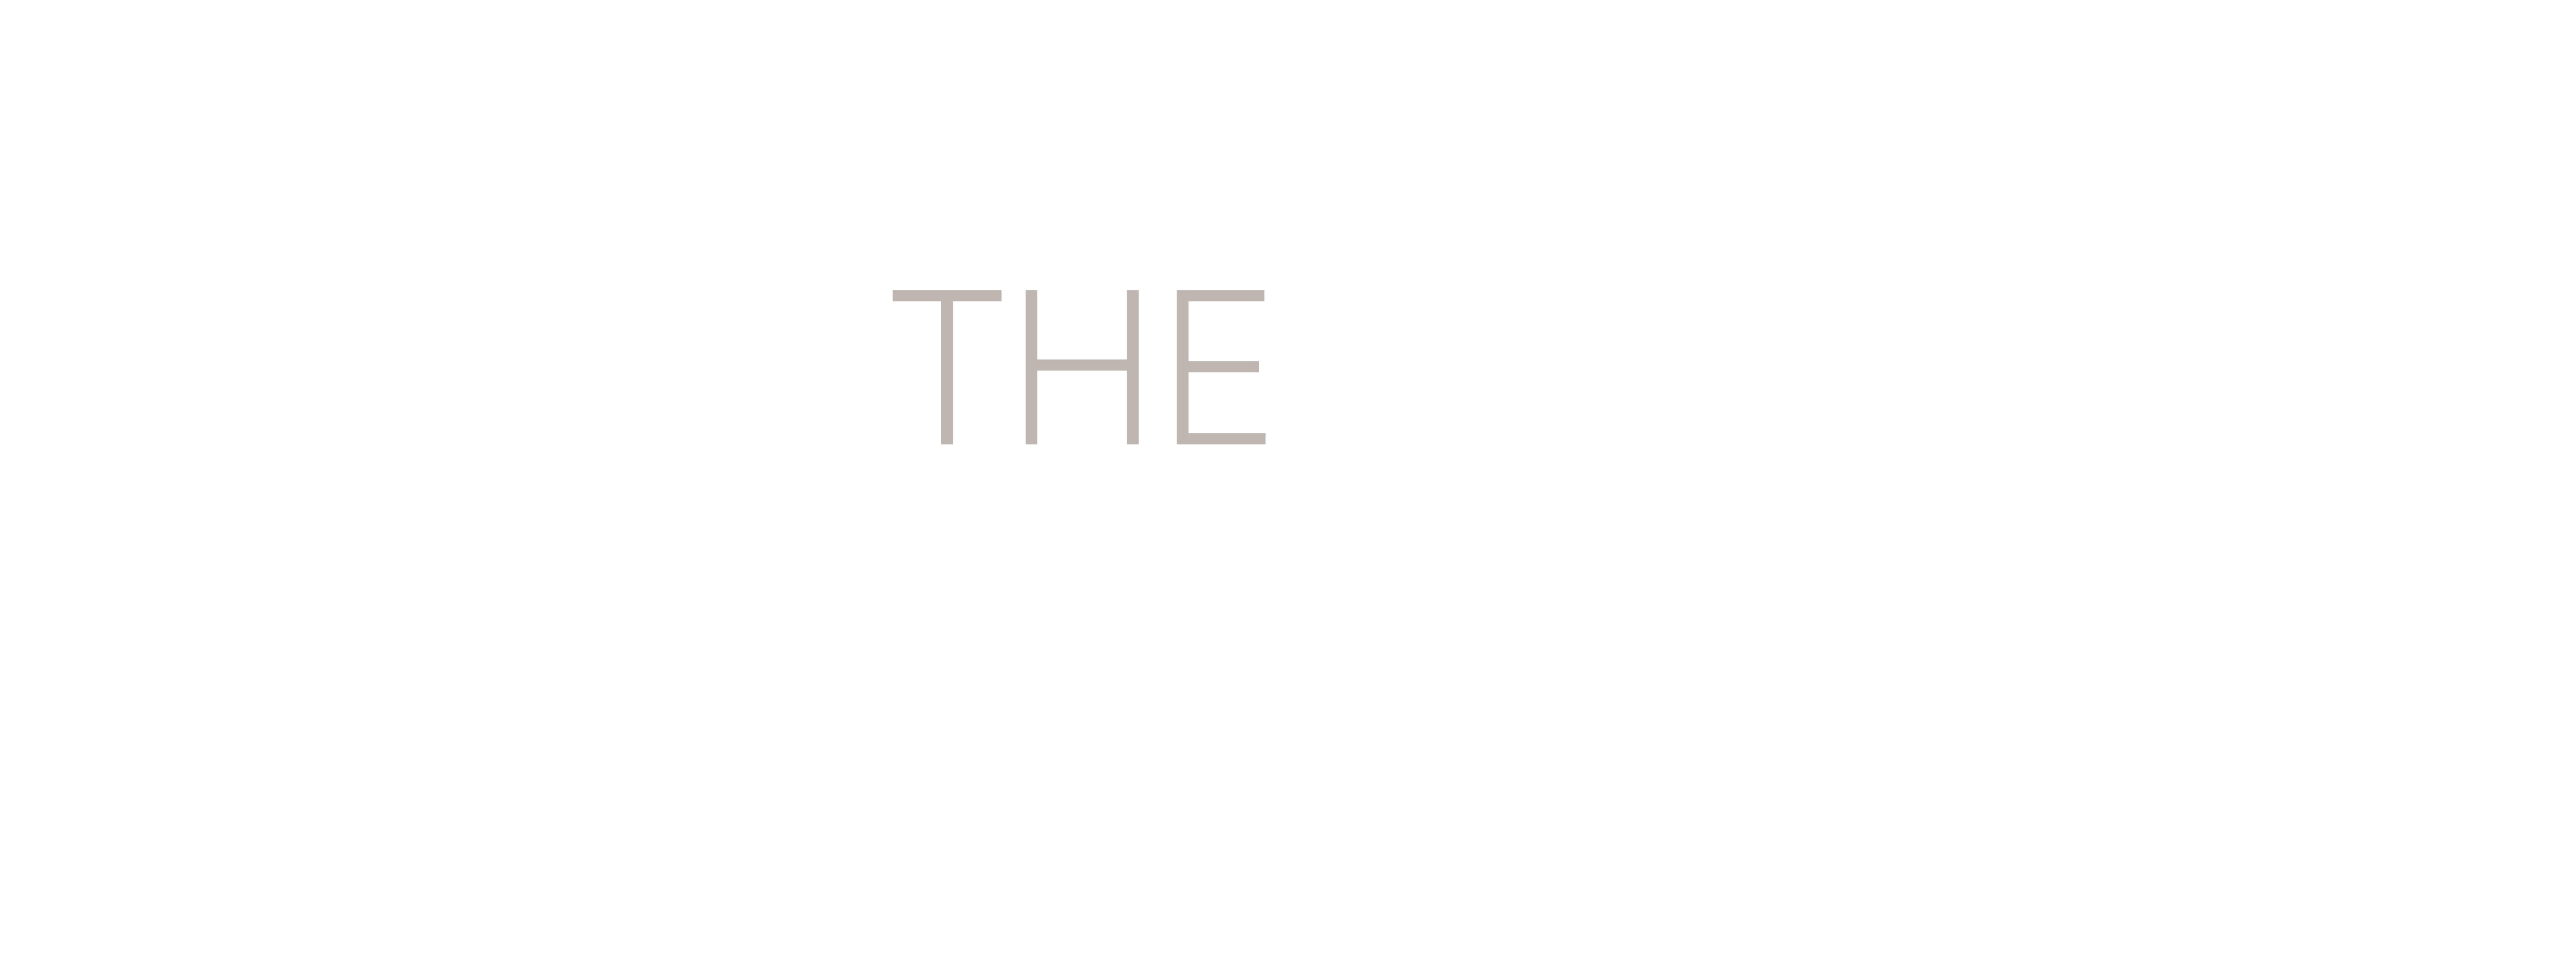 THEHAB-LOGO-solo-01.png